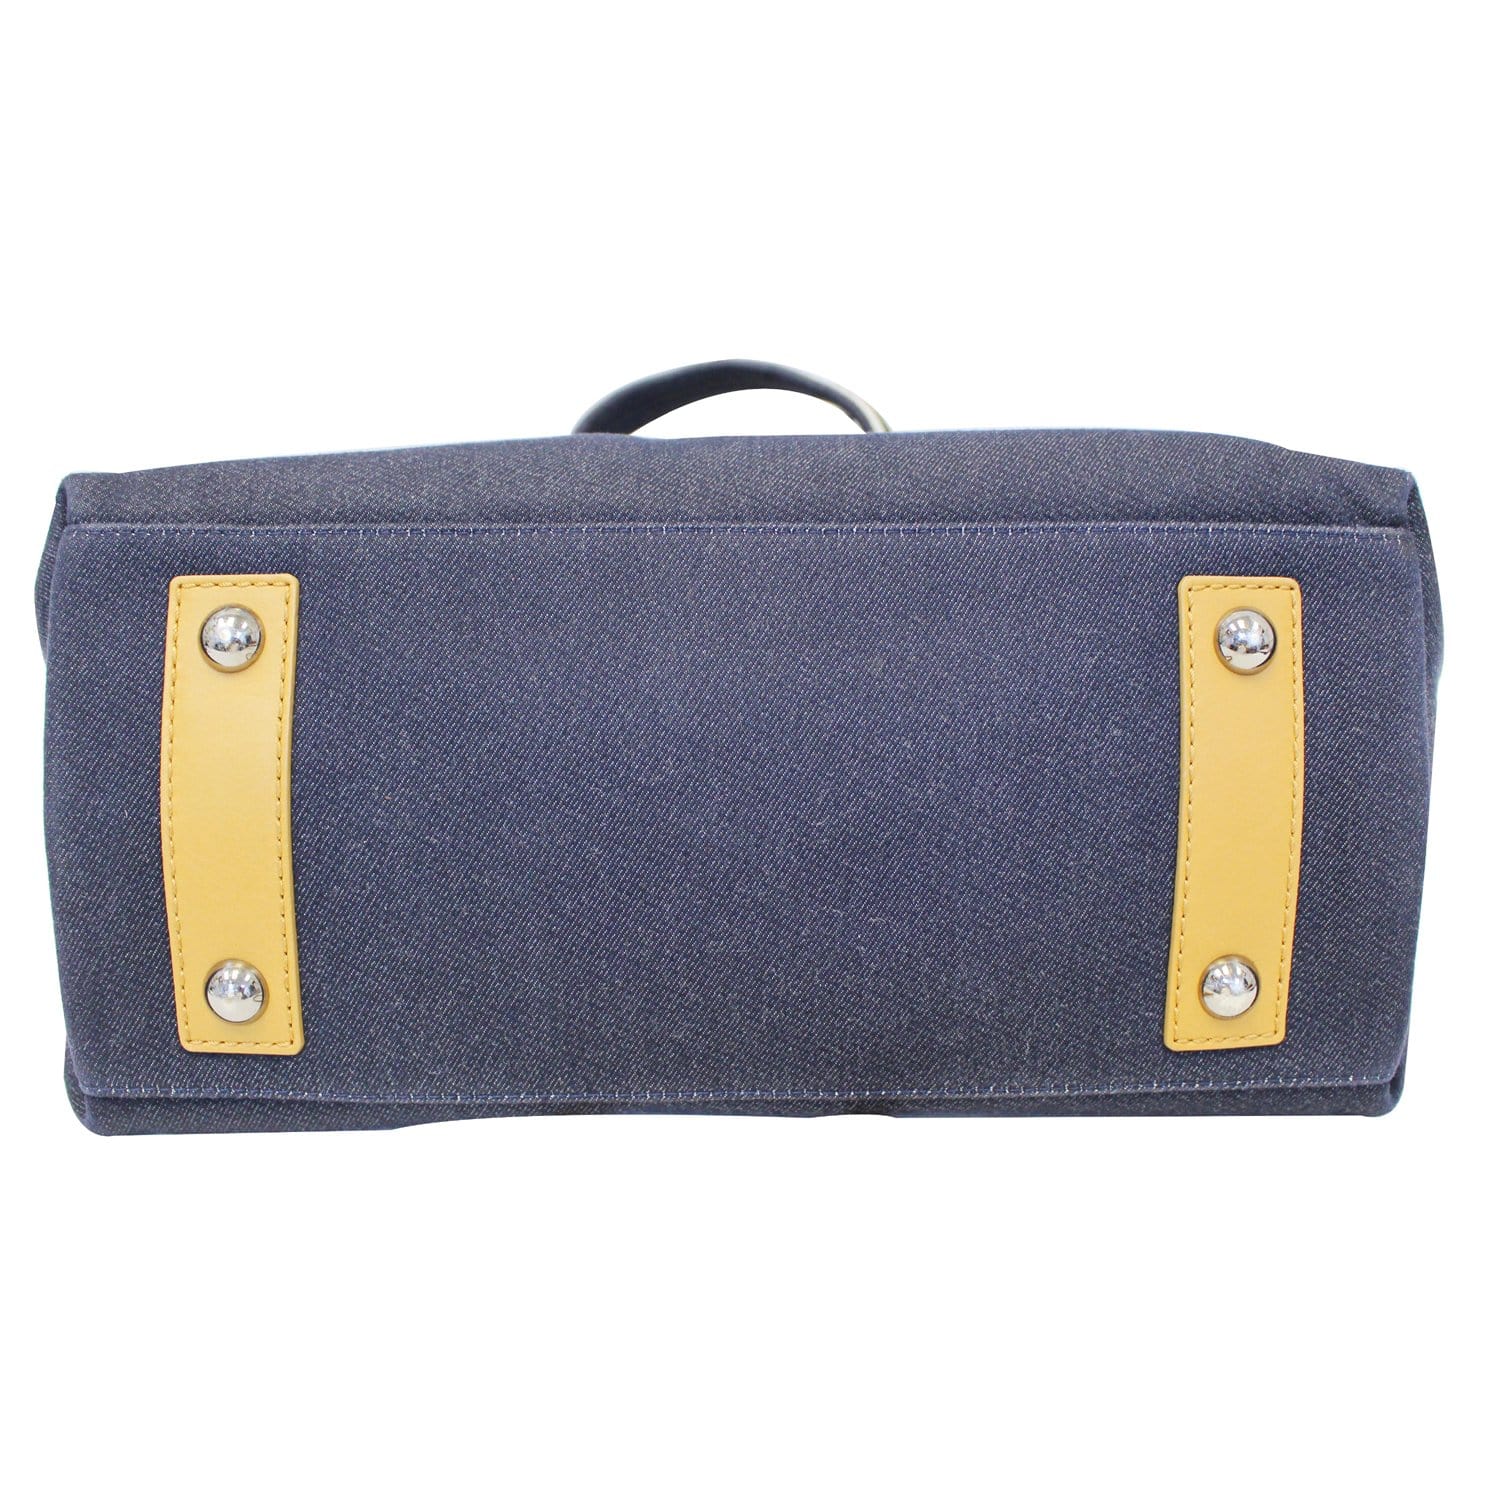 Chanel Denim Double Pocket Tote - Blue Totes, Handbags - CHA936414